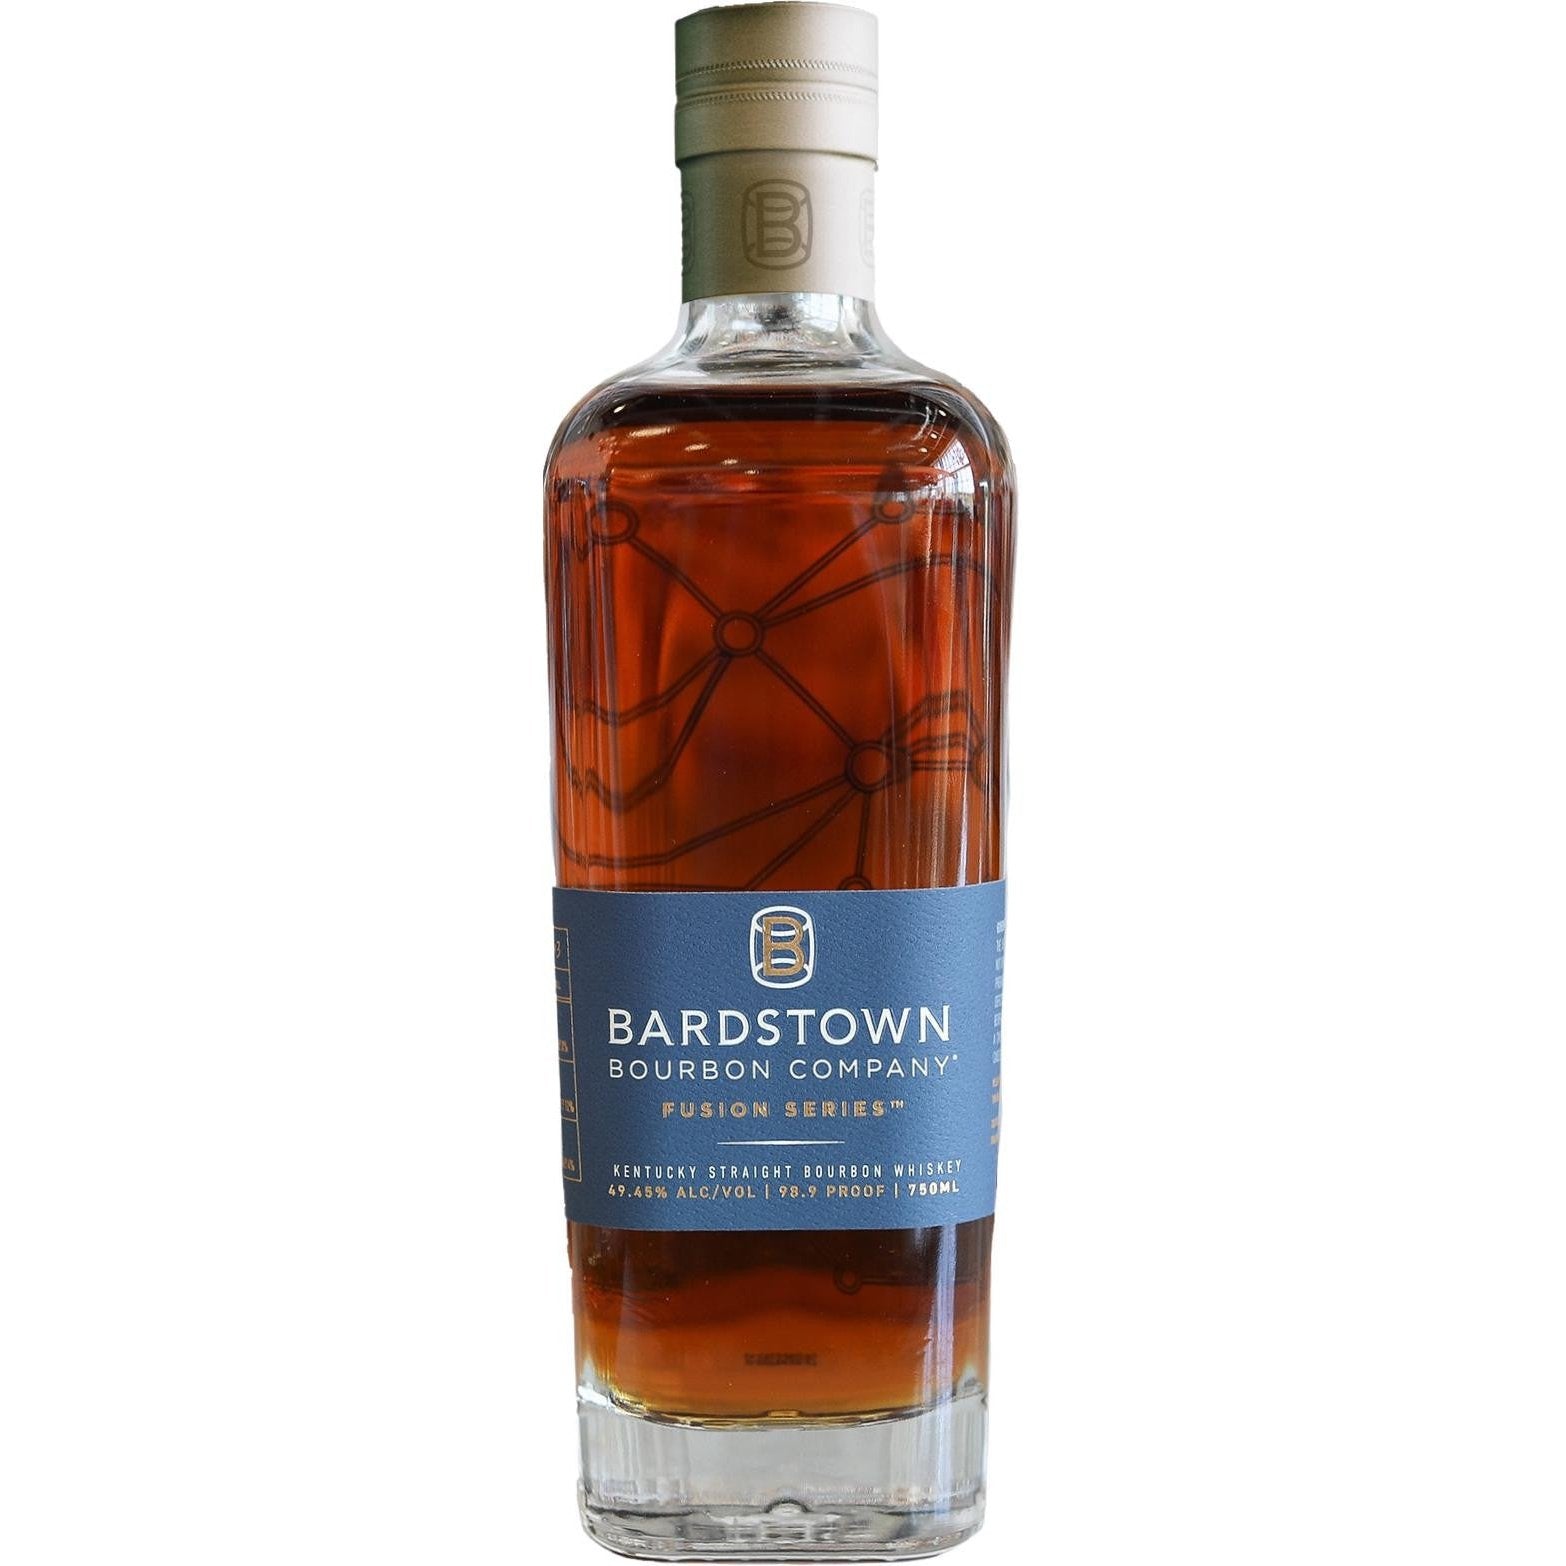 Bardstown Company "Fusion Series" Batch 6 Kentucky Straight Bourbon Whiskey 750ml